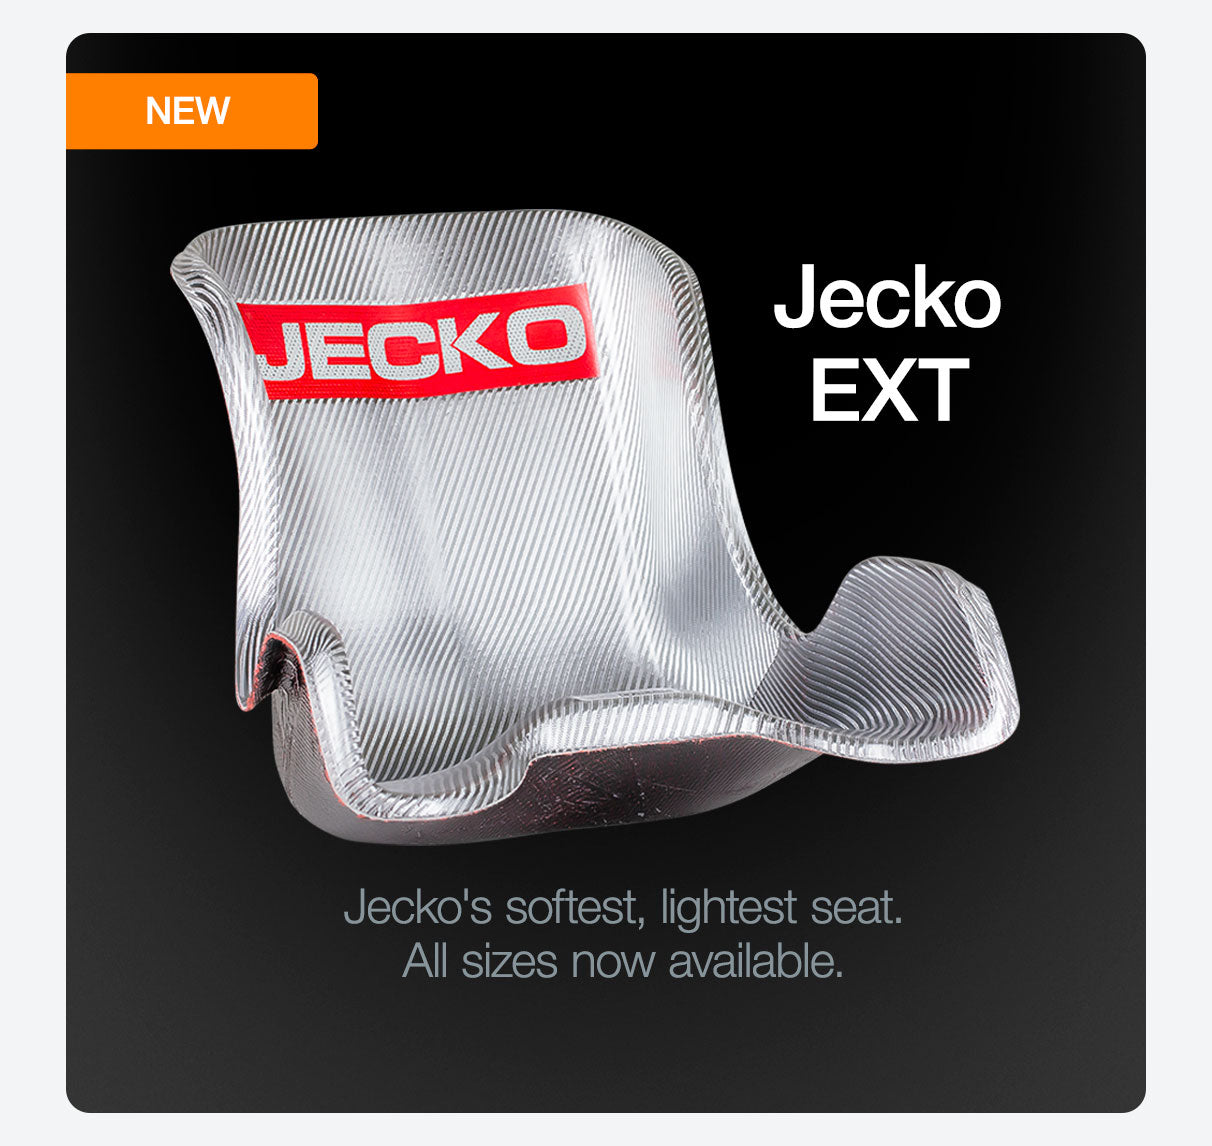 Jecko EXT. Softest, lightest kart seat